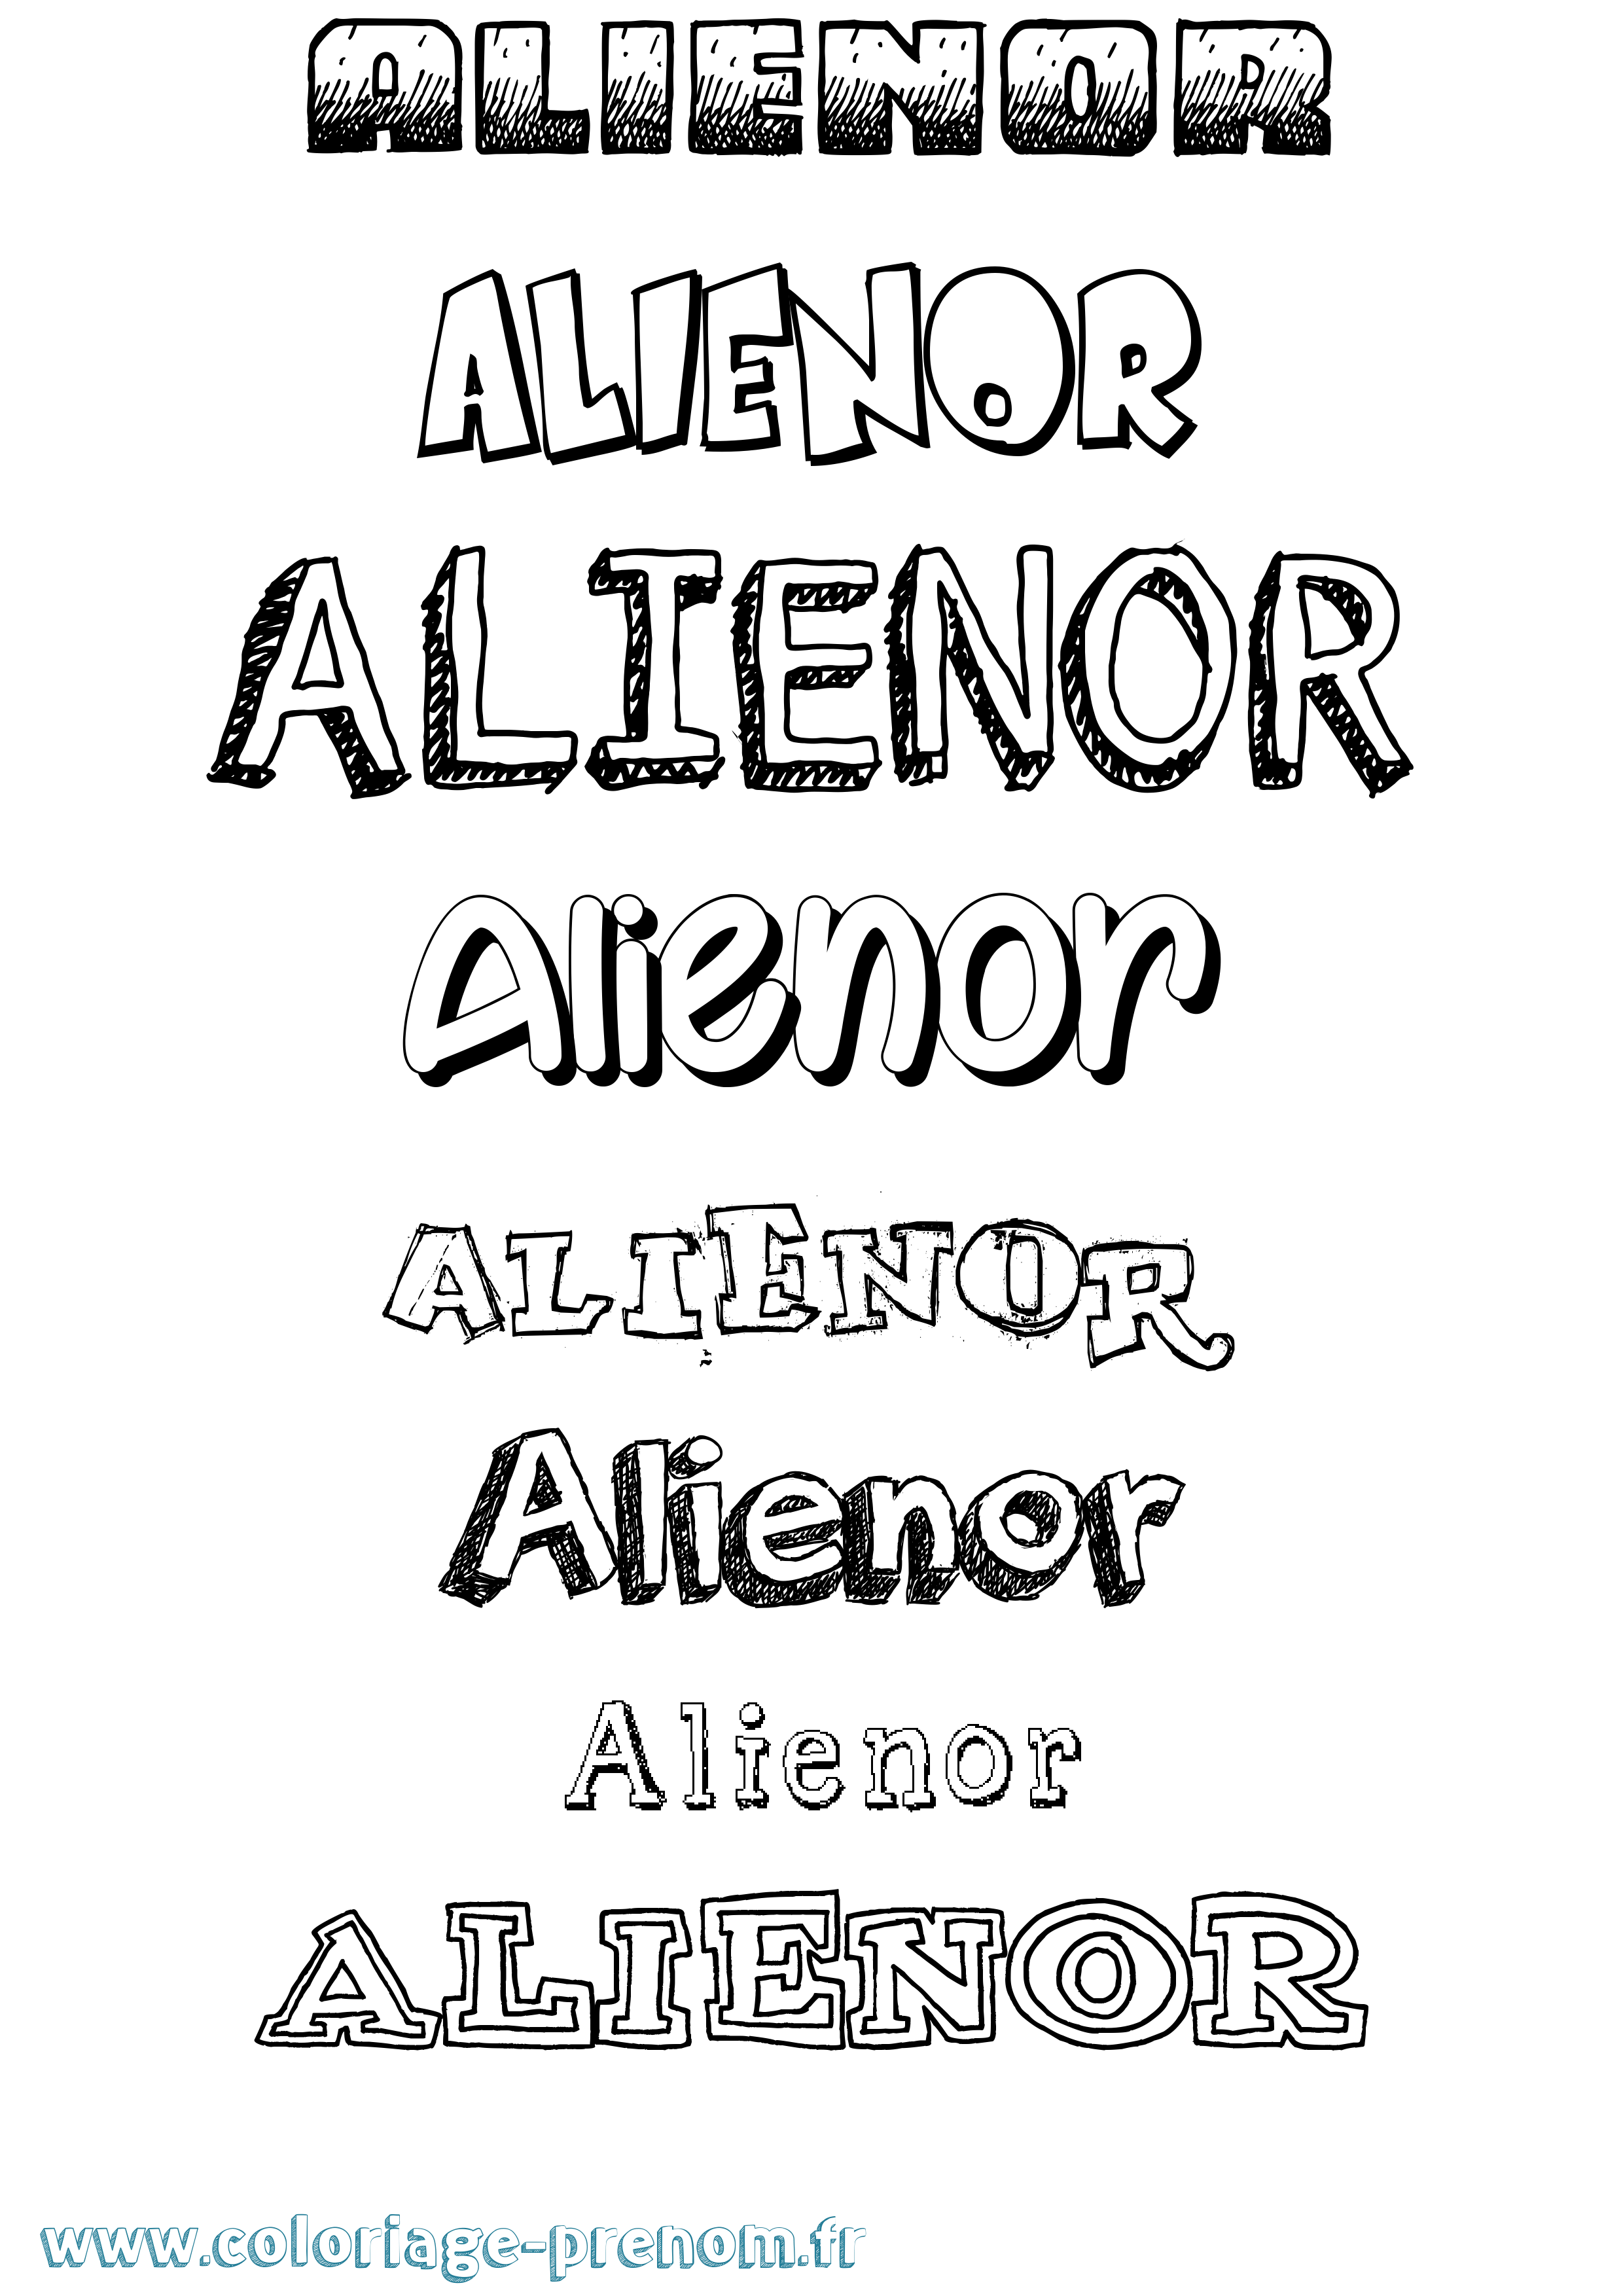 Coloriage prénom Alienor